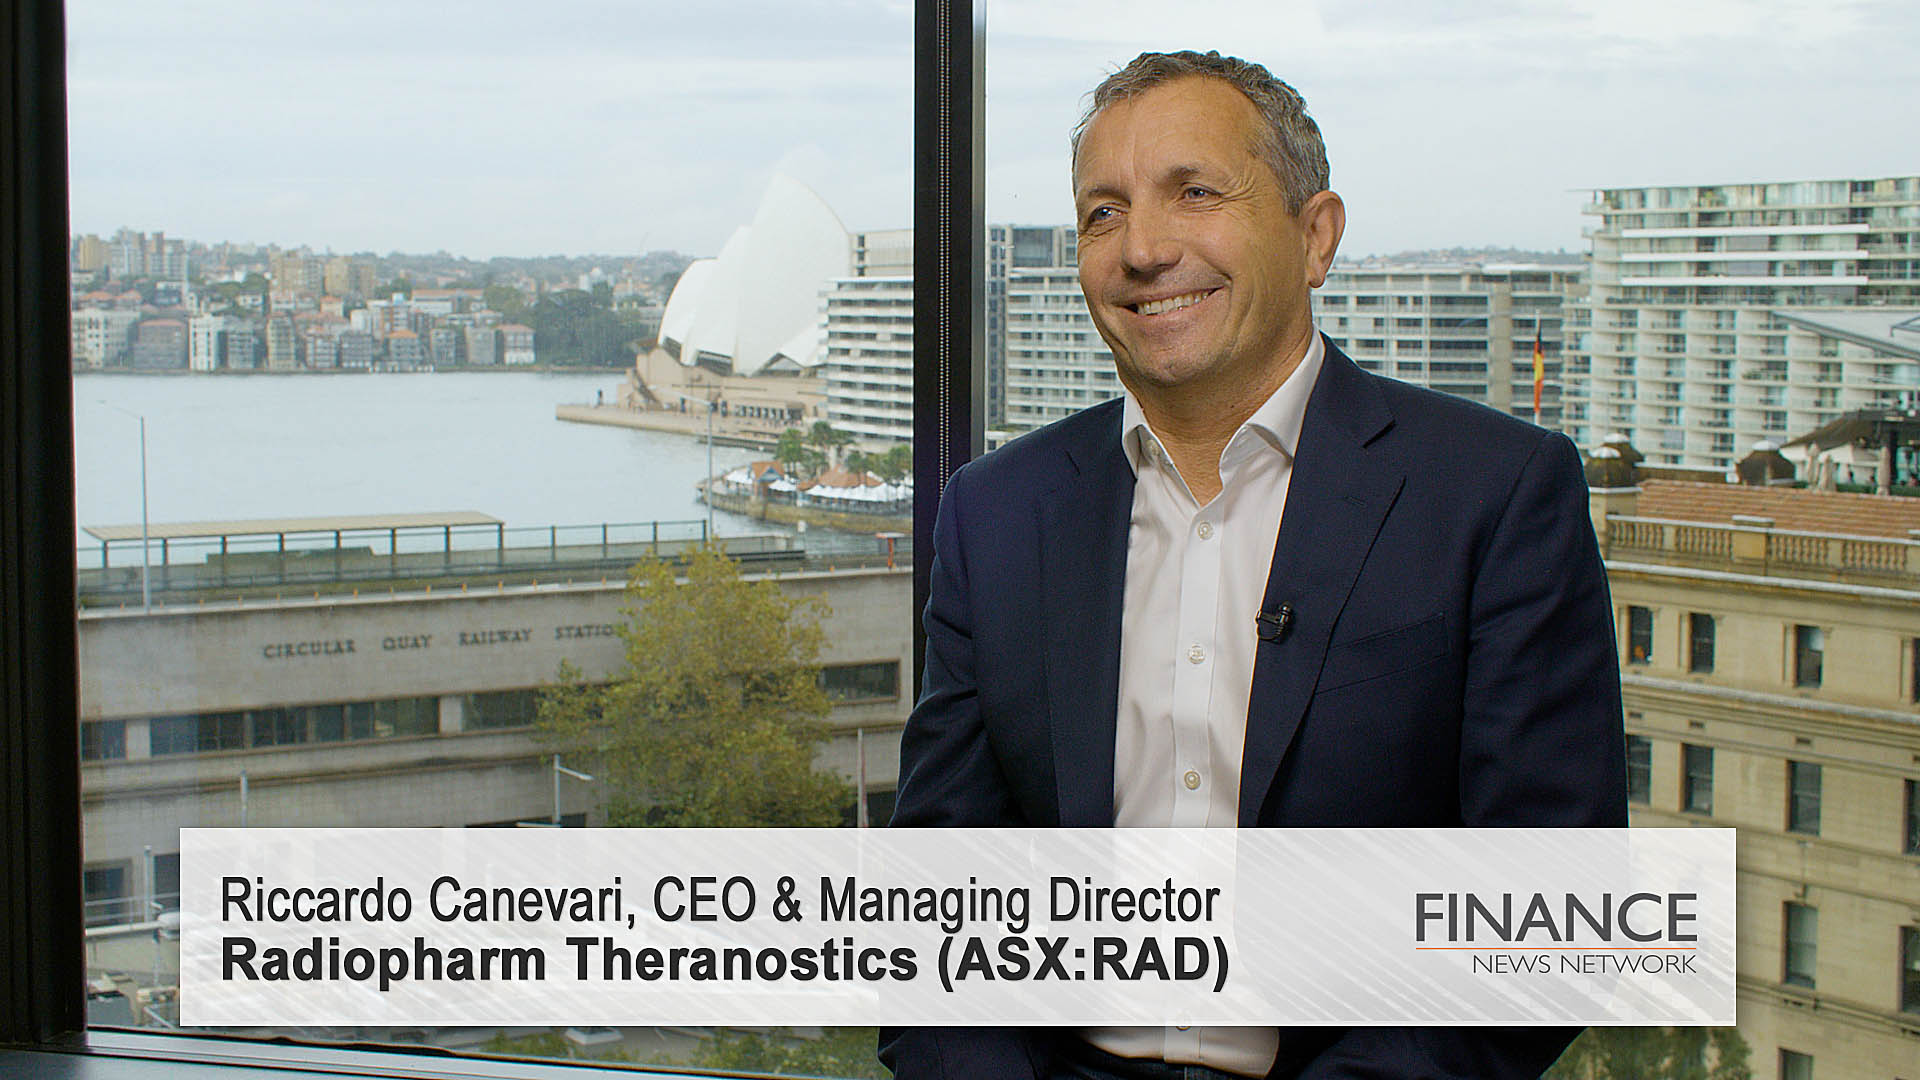 Radiopharm Theranostics (ASX:RAD) – developing a portfolio of assets targeting cancer